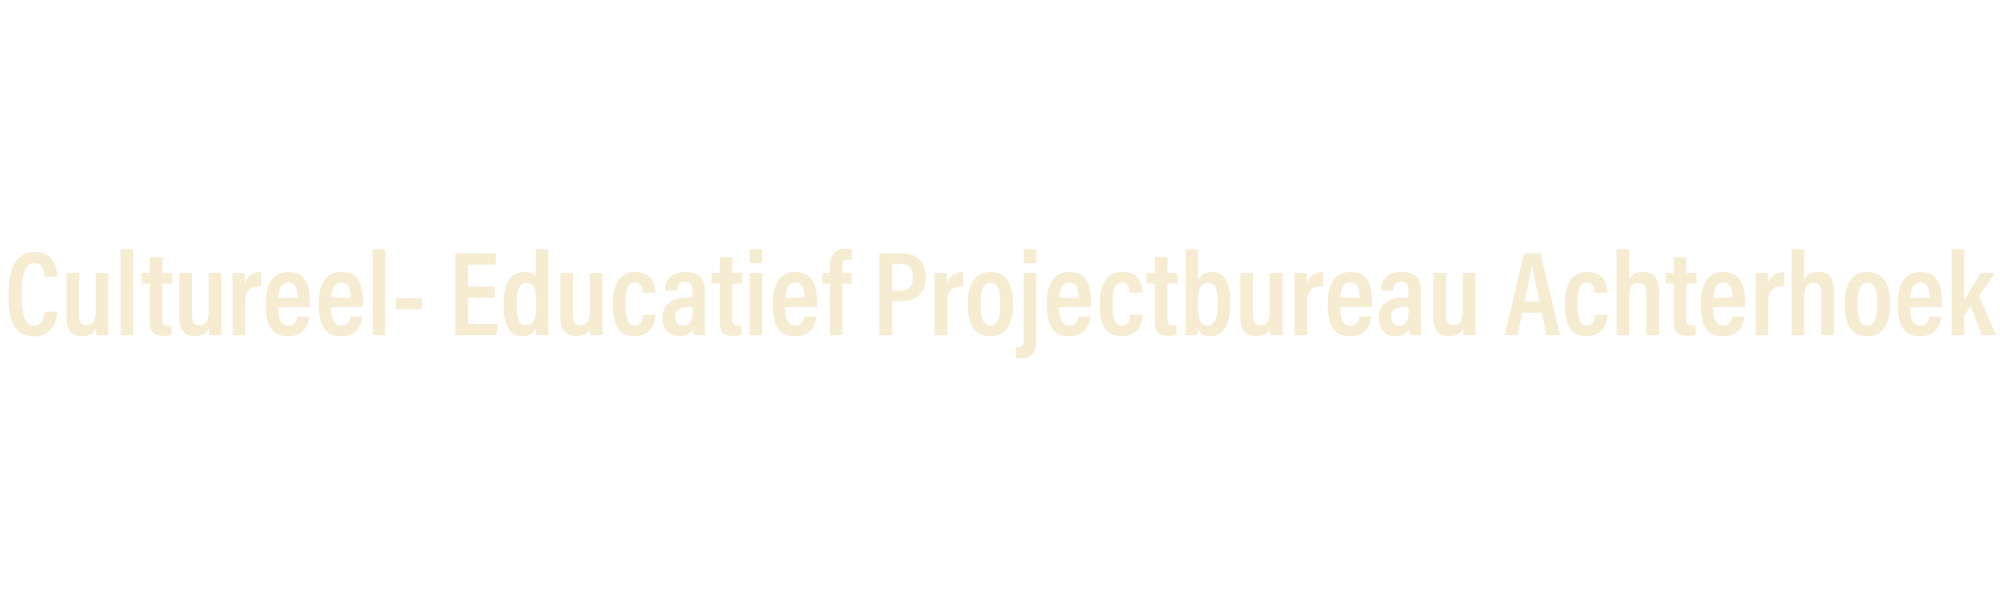 Cultureel- Educatief Projectbureau Achterhoek